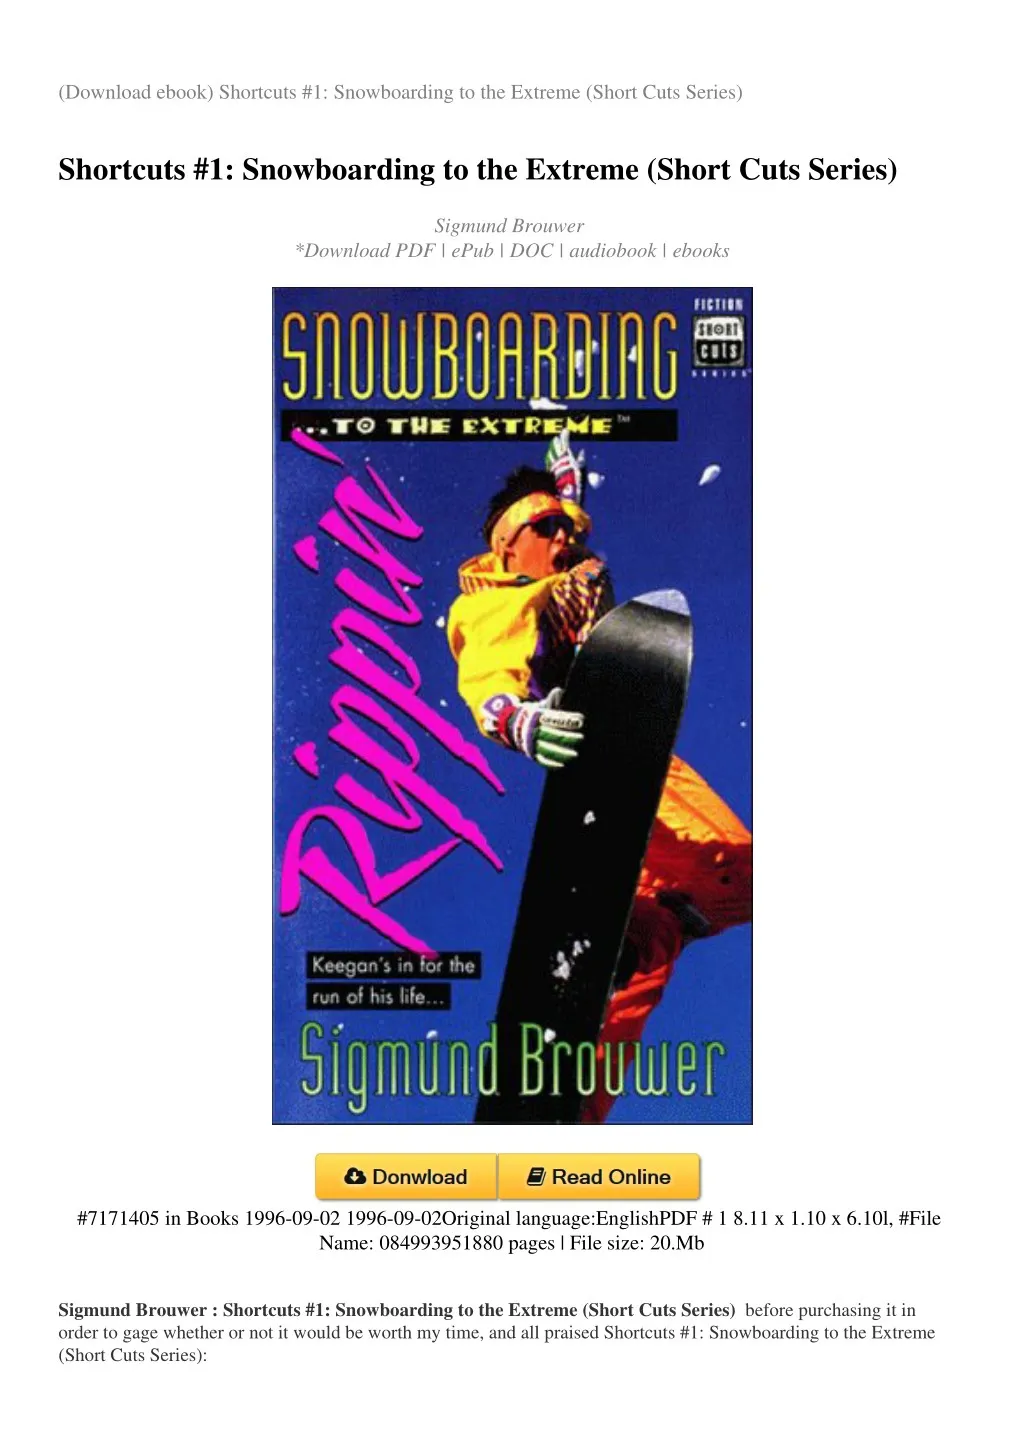 download ebook shortcuts 1 snowboarding